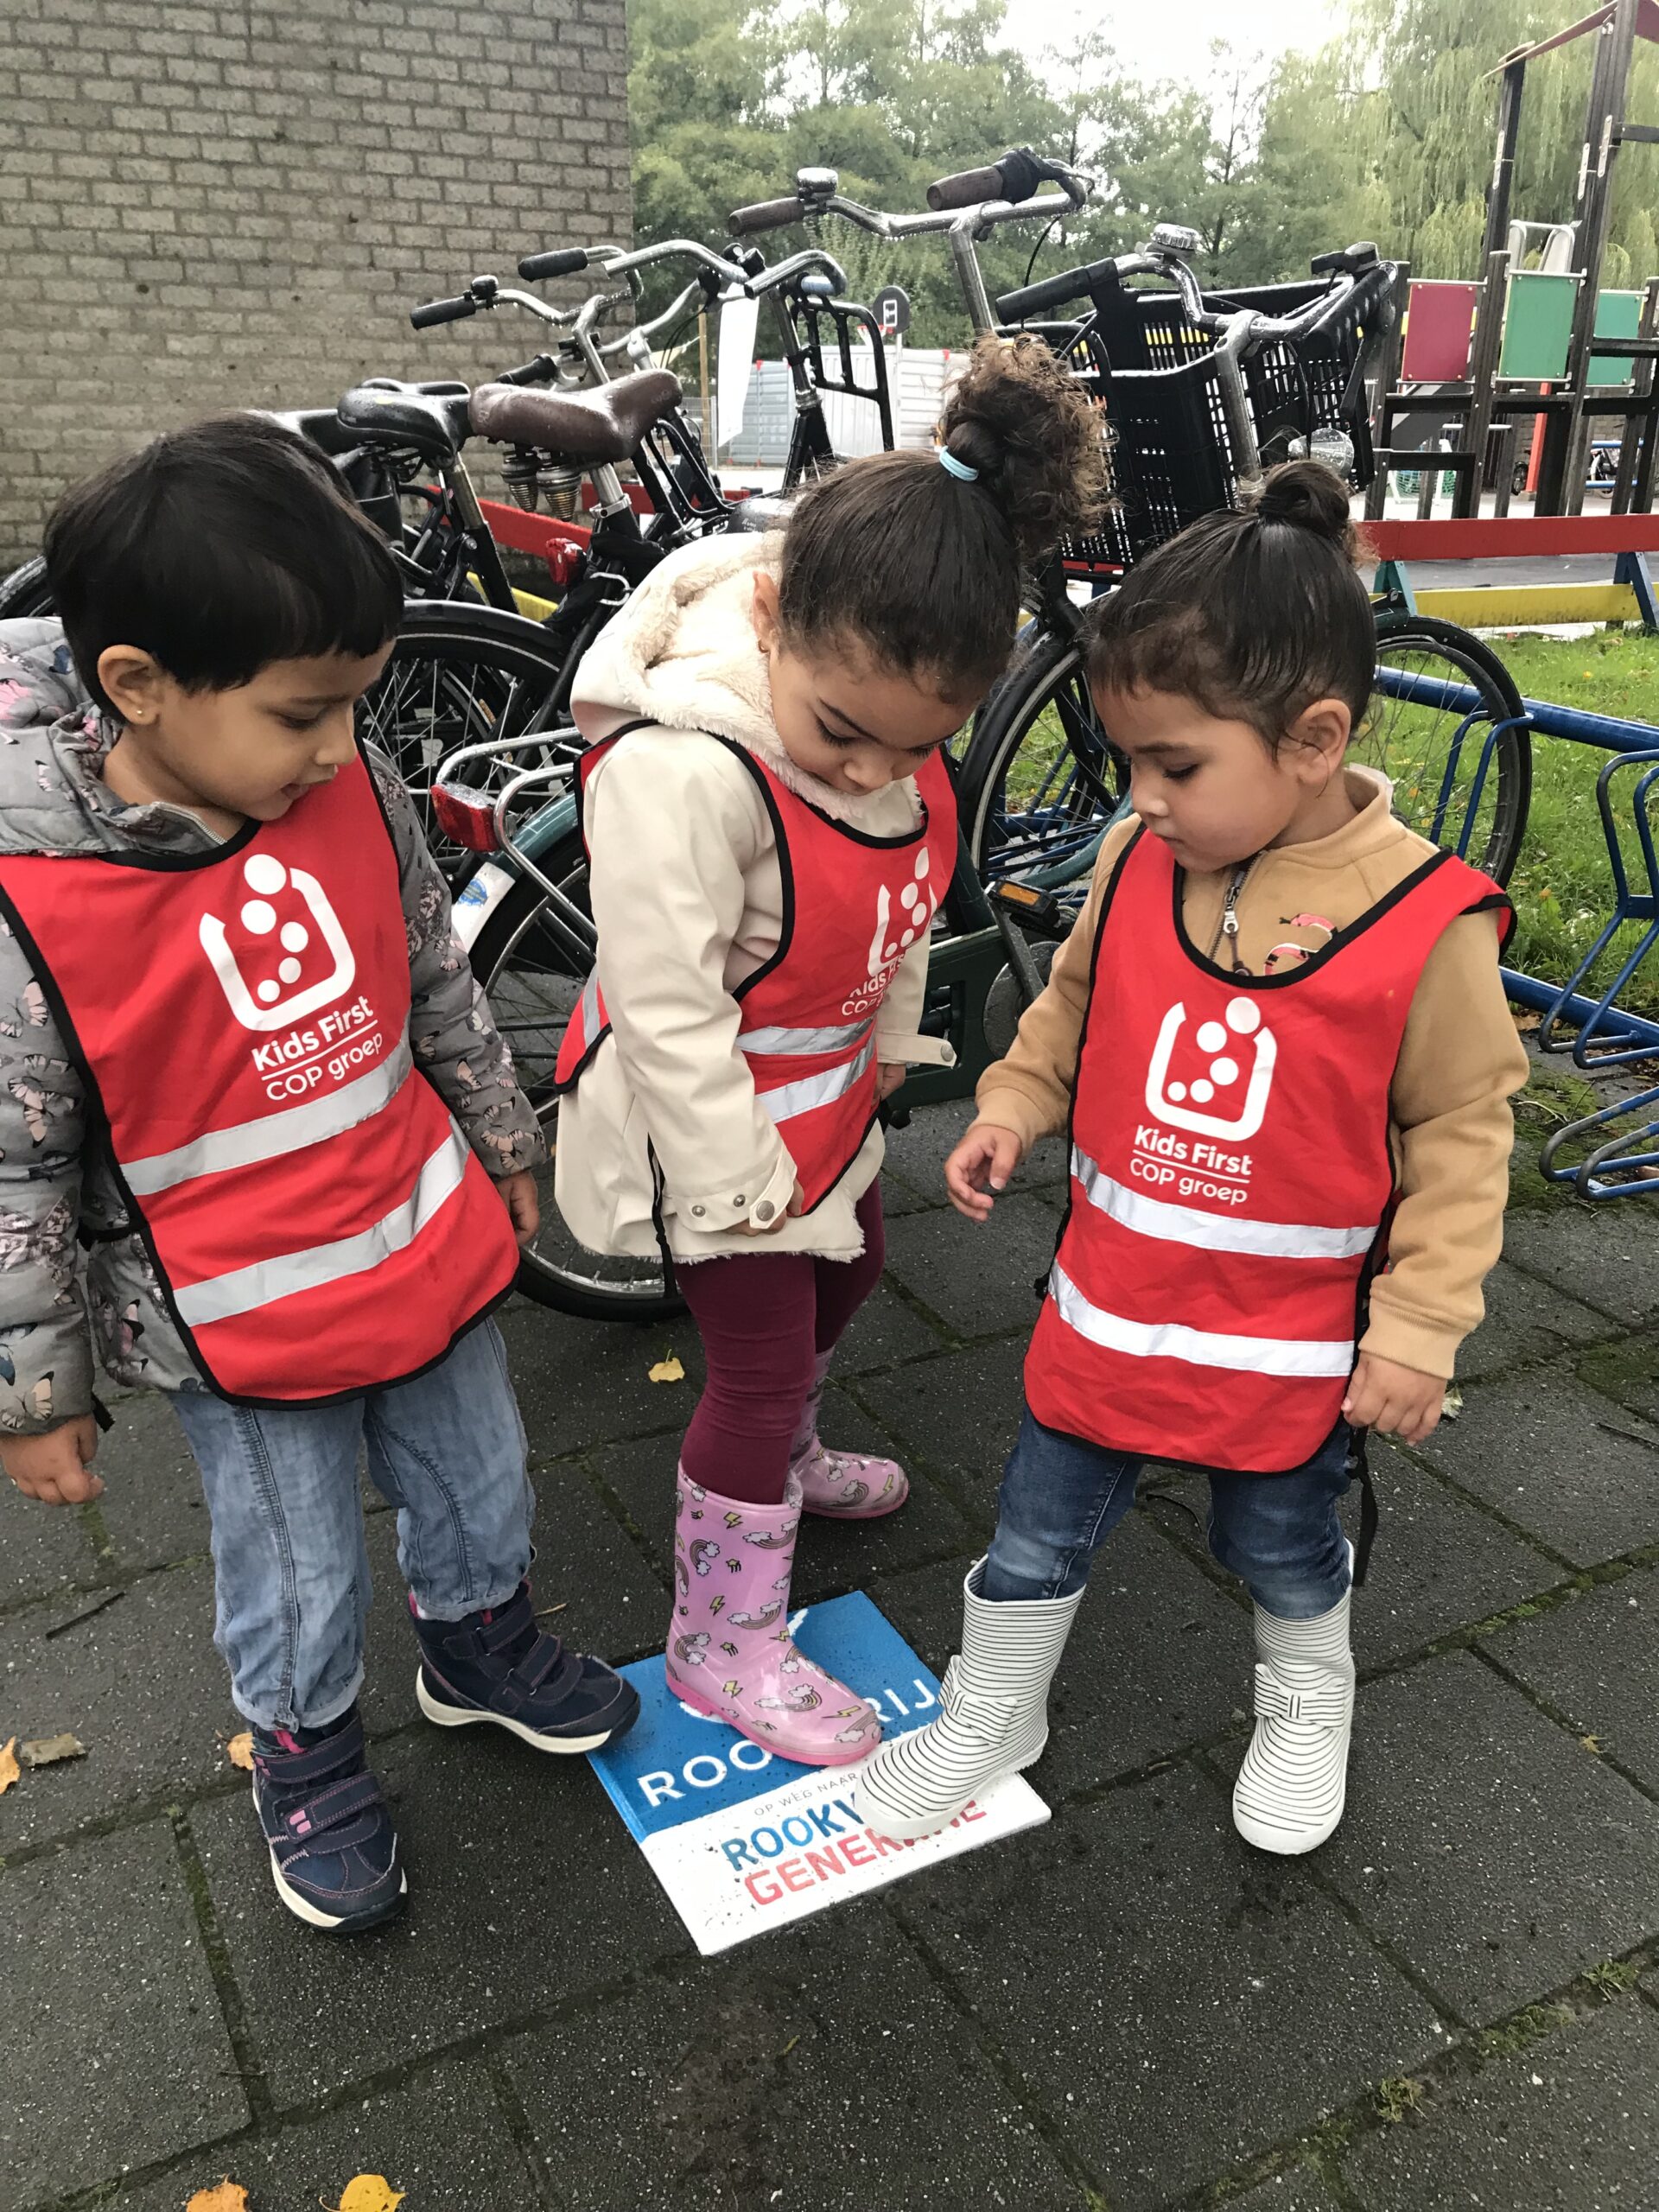 Tante Toosje peuteropvang Groningen - Kids First COP groep